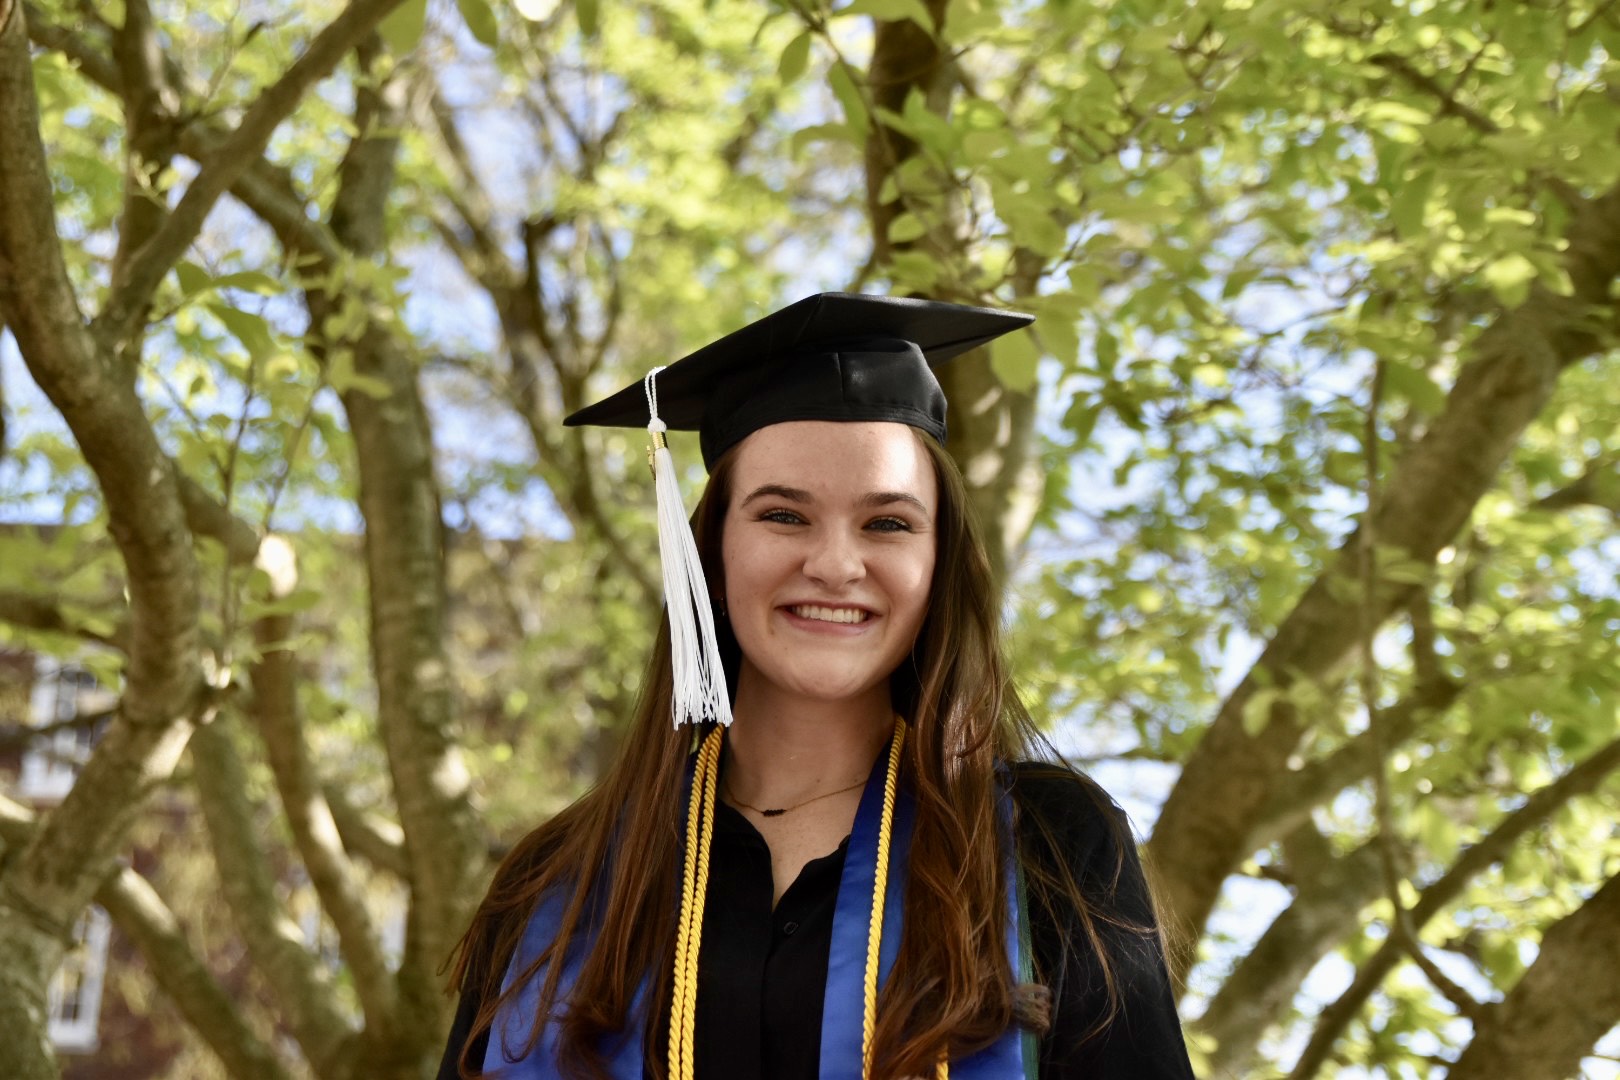 Victoria (Tori) Benard, a May 2022 graduated senior from Goreville, Illinois